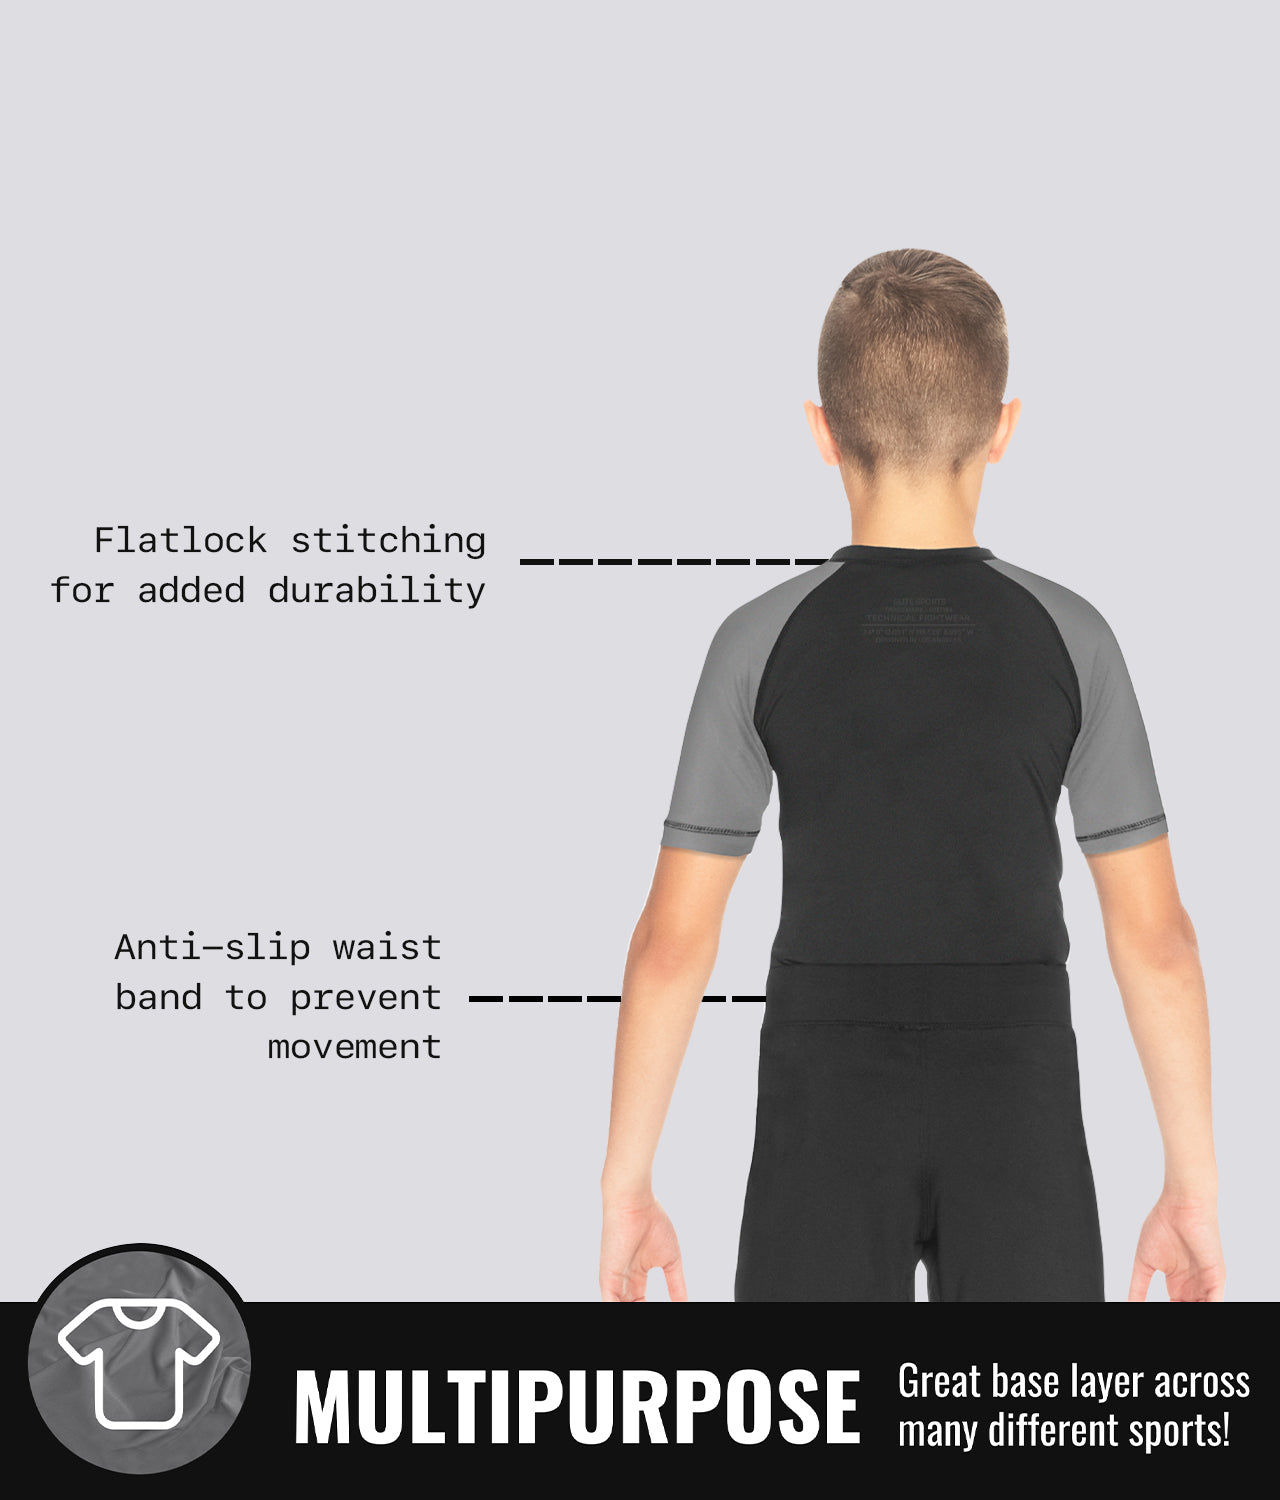 Kids' Standard Gray Short Sleeve Training Rash Guard